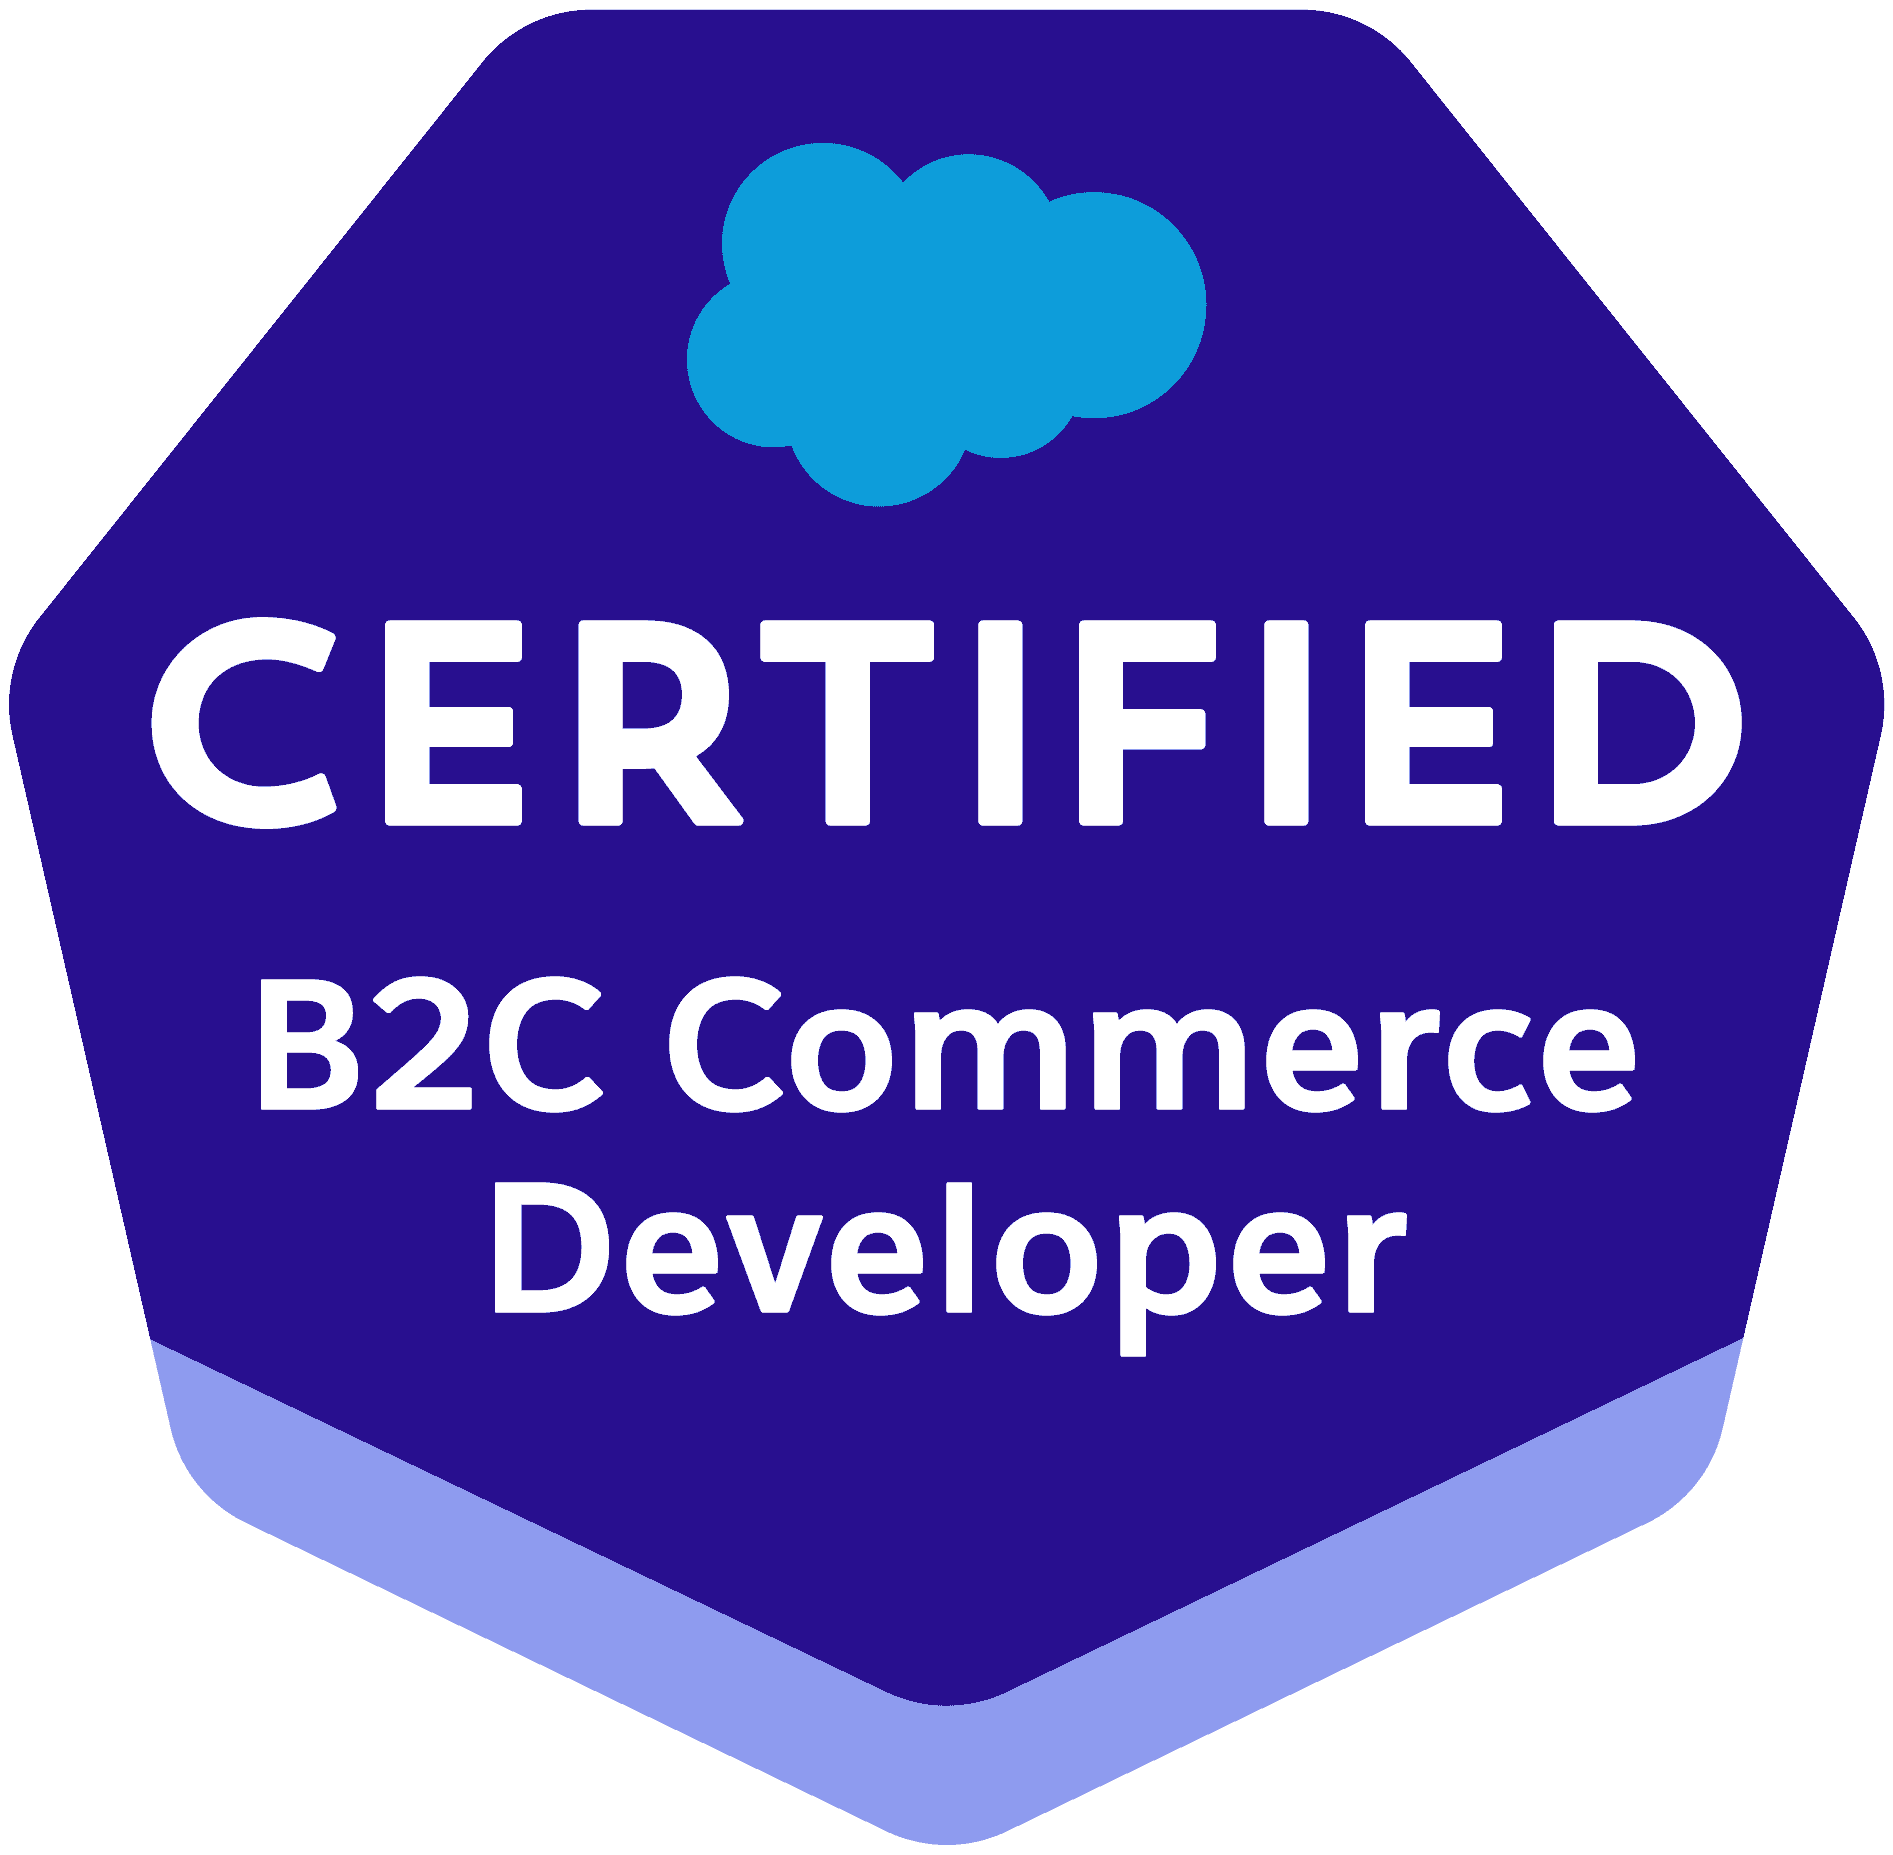 The Certified B2C Commerce Developer badge.